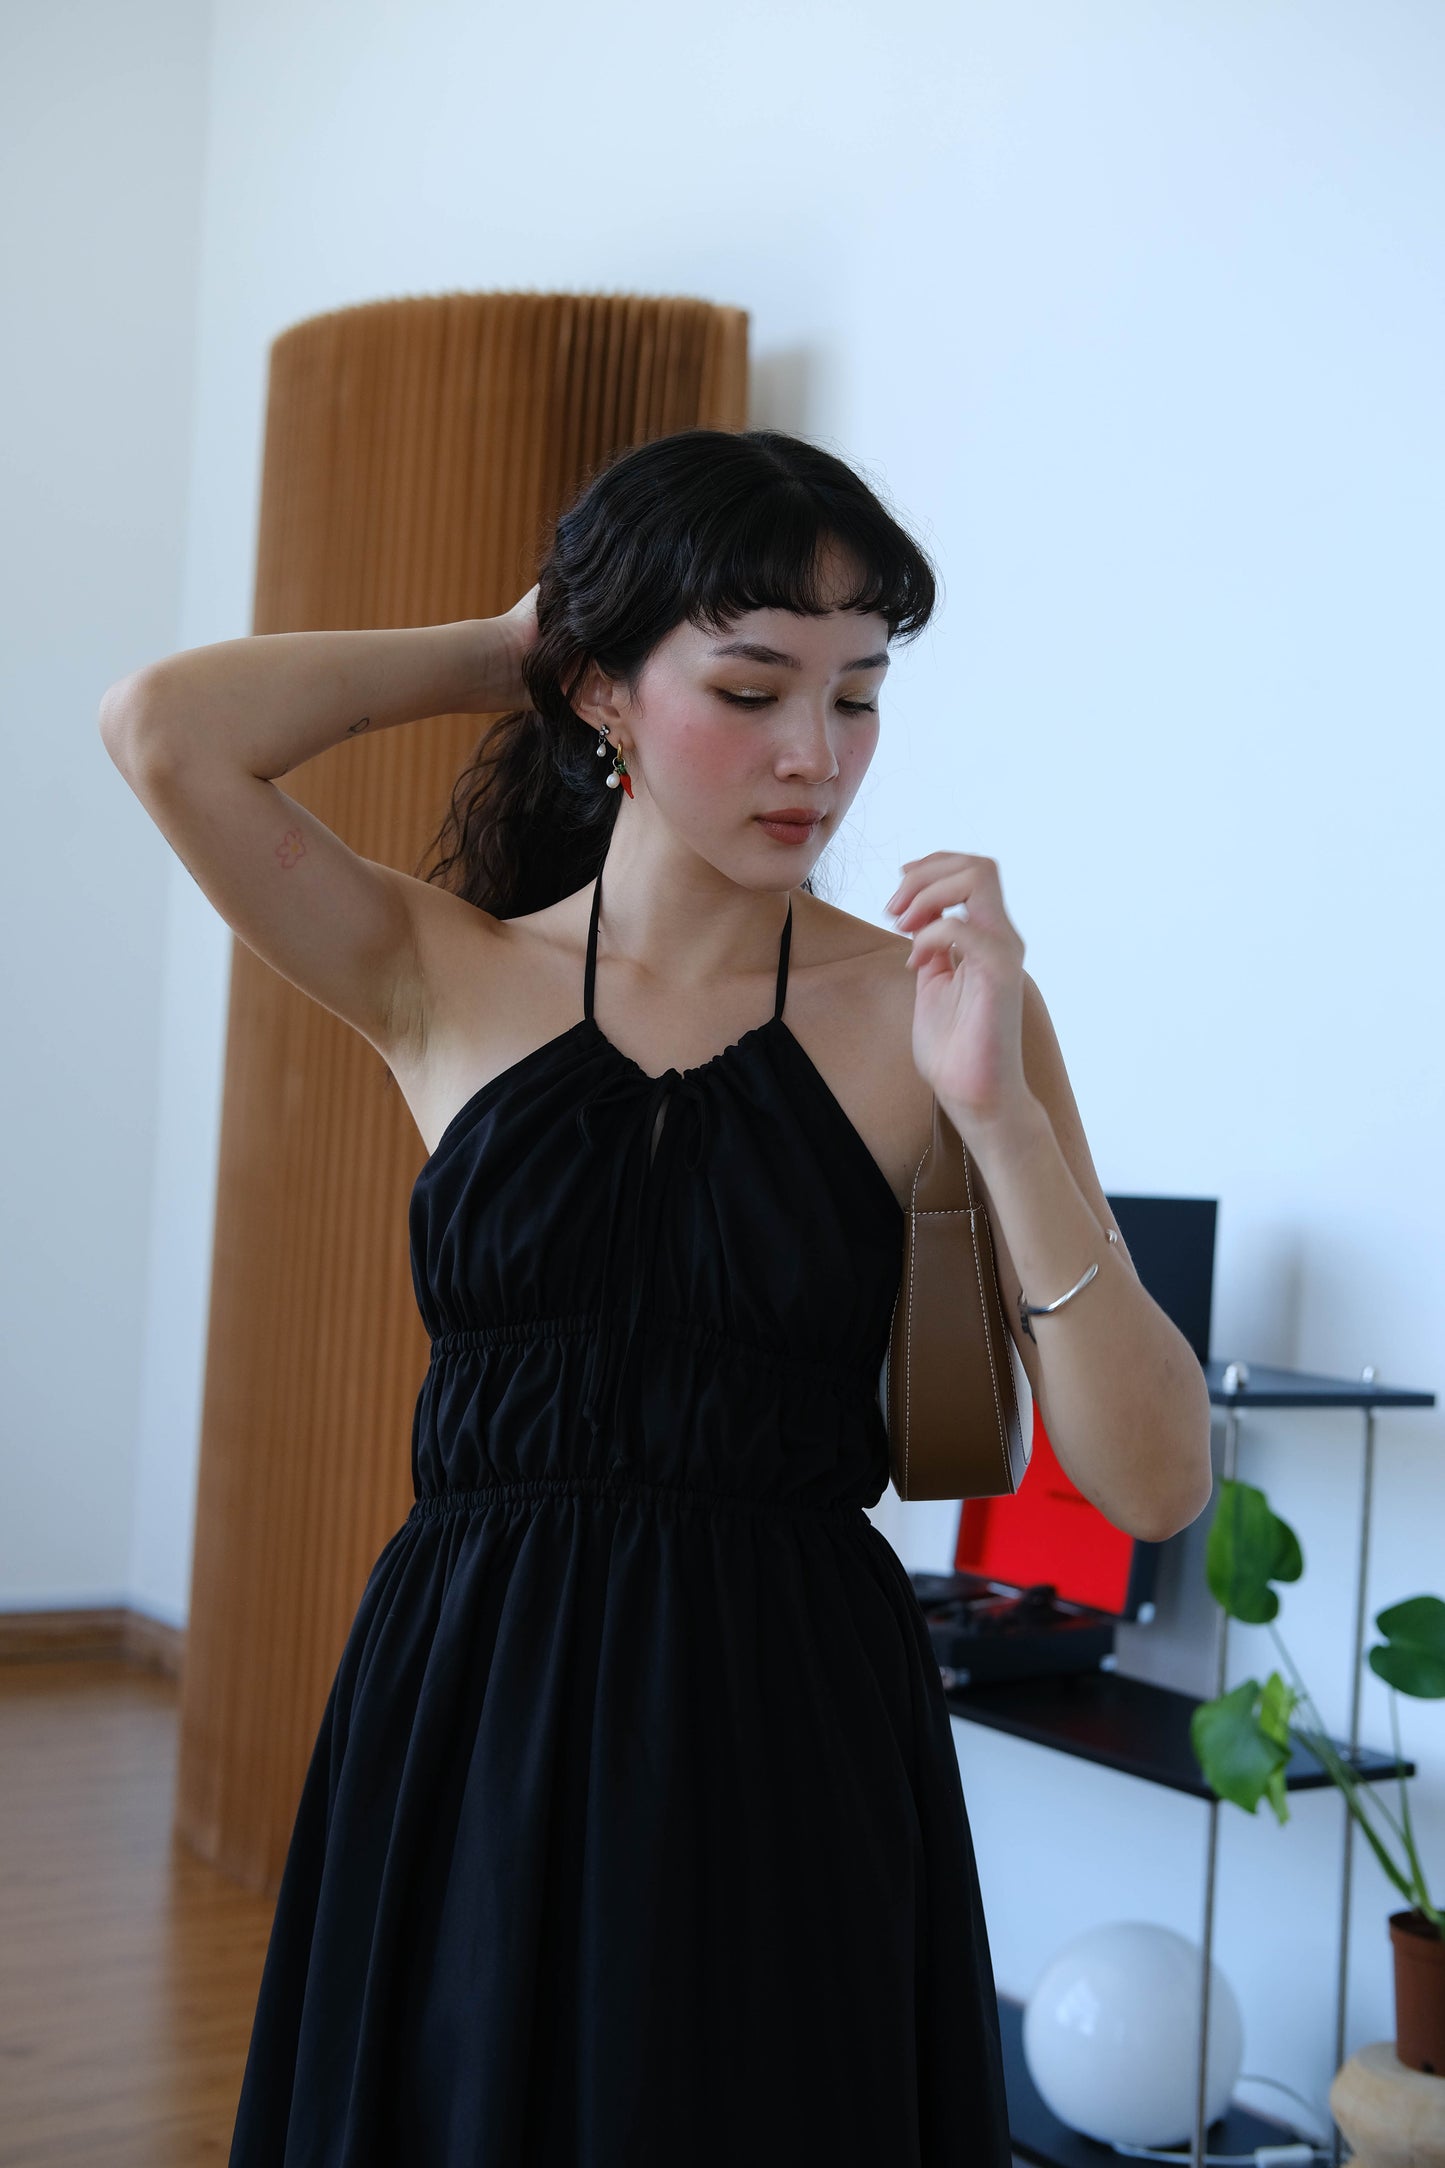 Asymmetrical slip dress in classic black